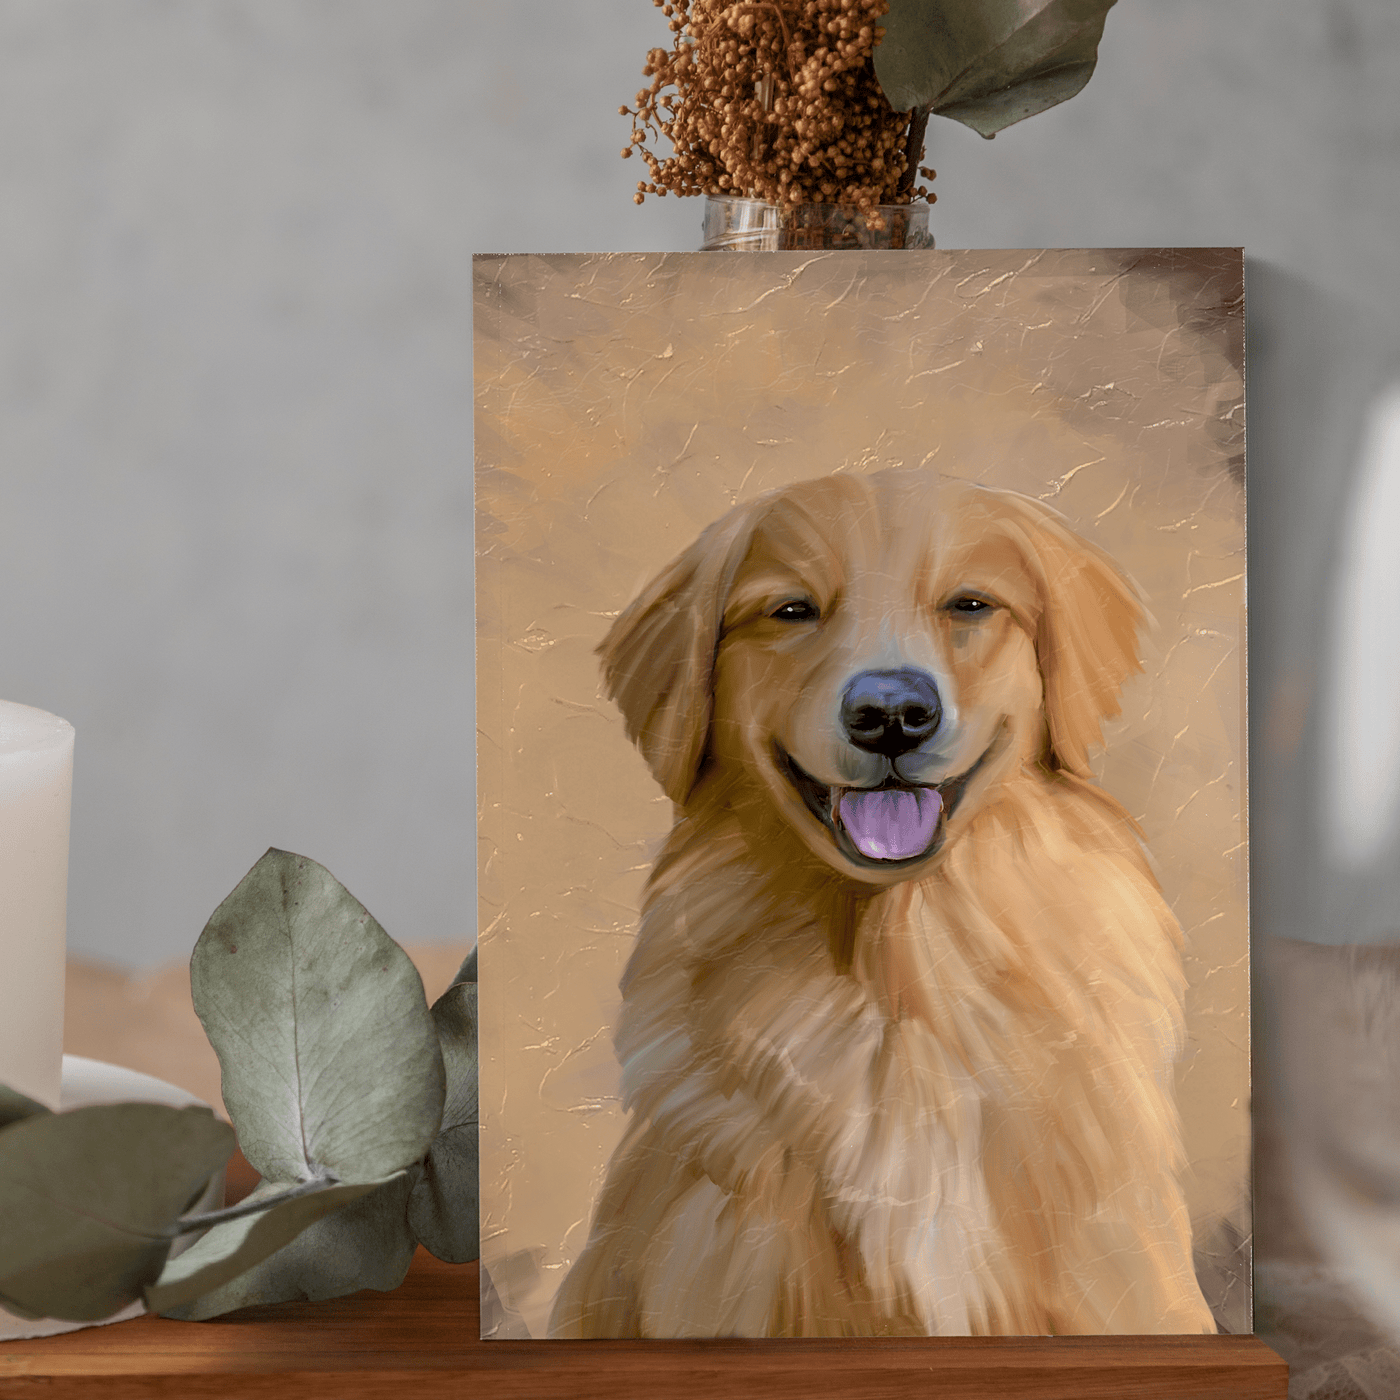 acrylic dog portrait of an adorable fur dog